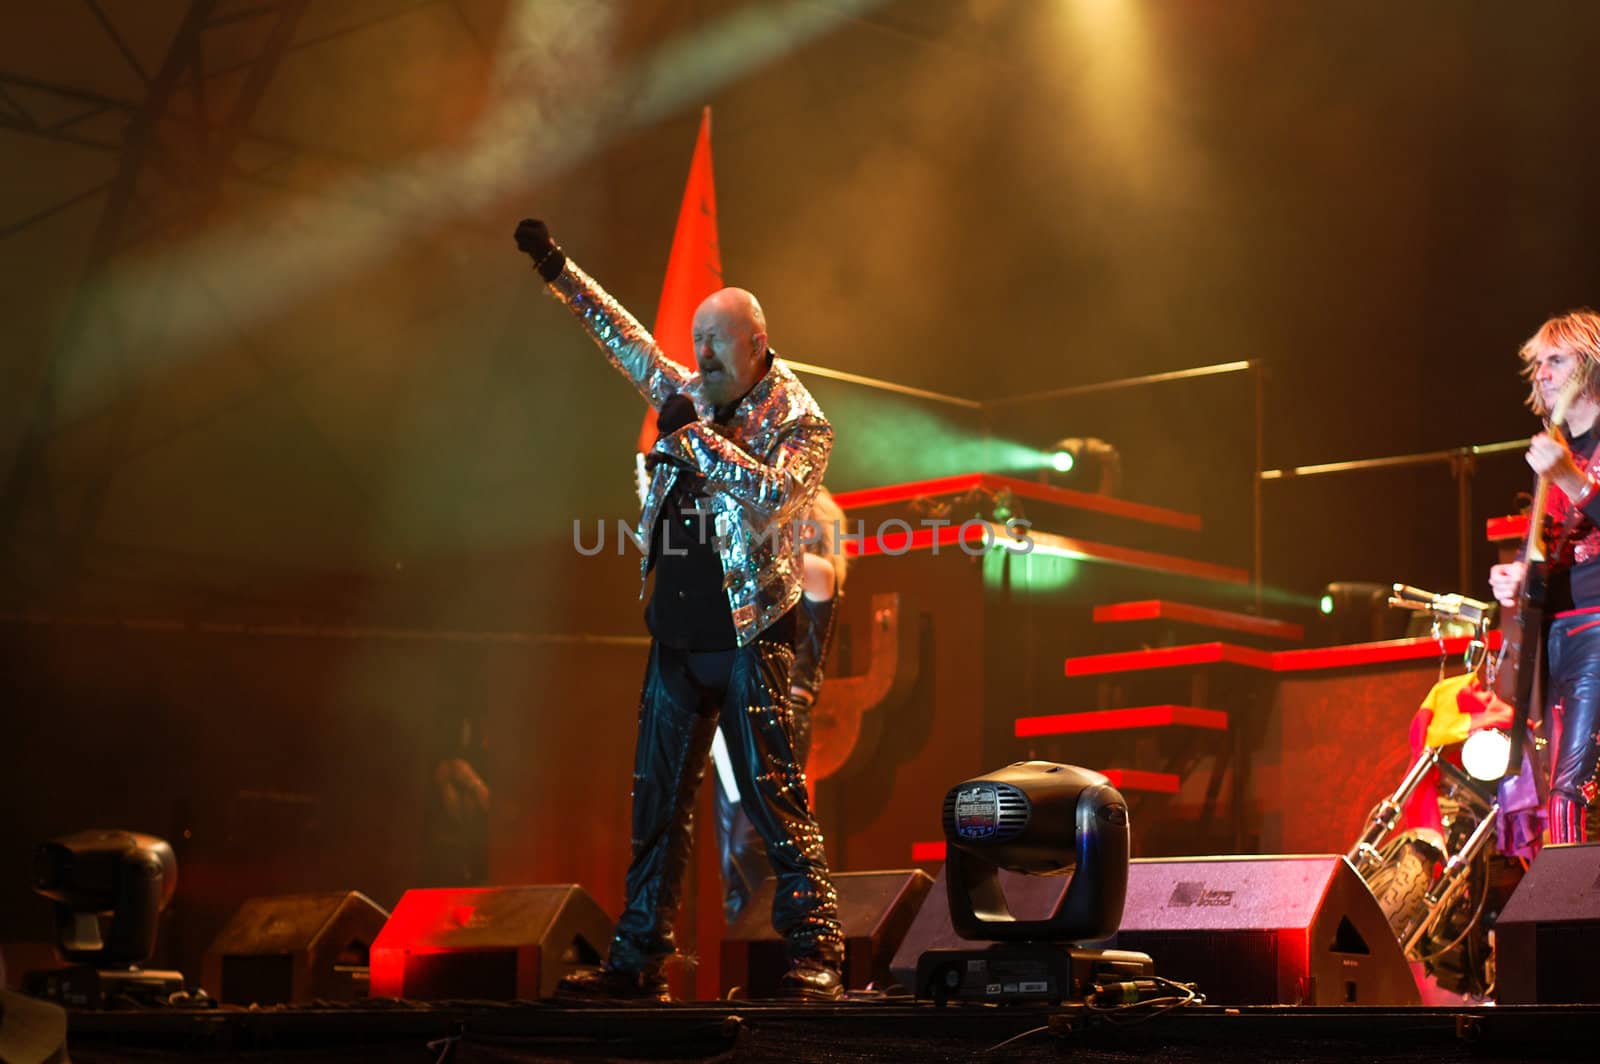 Judas Priest in Concert by marimar8989